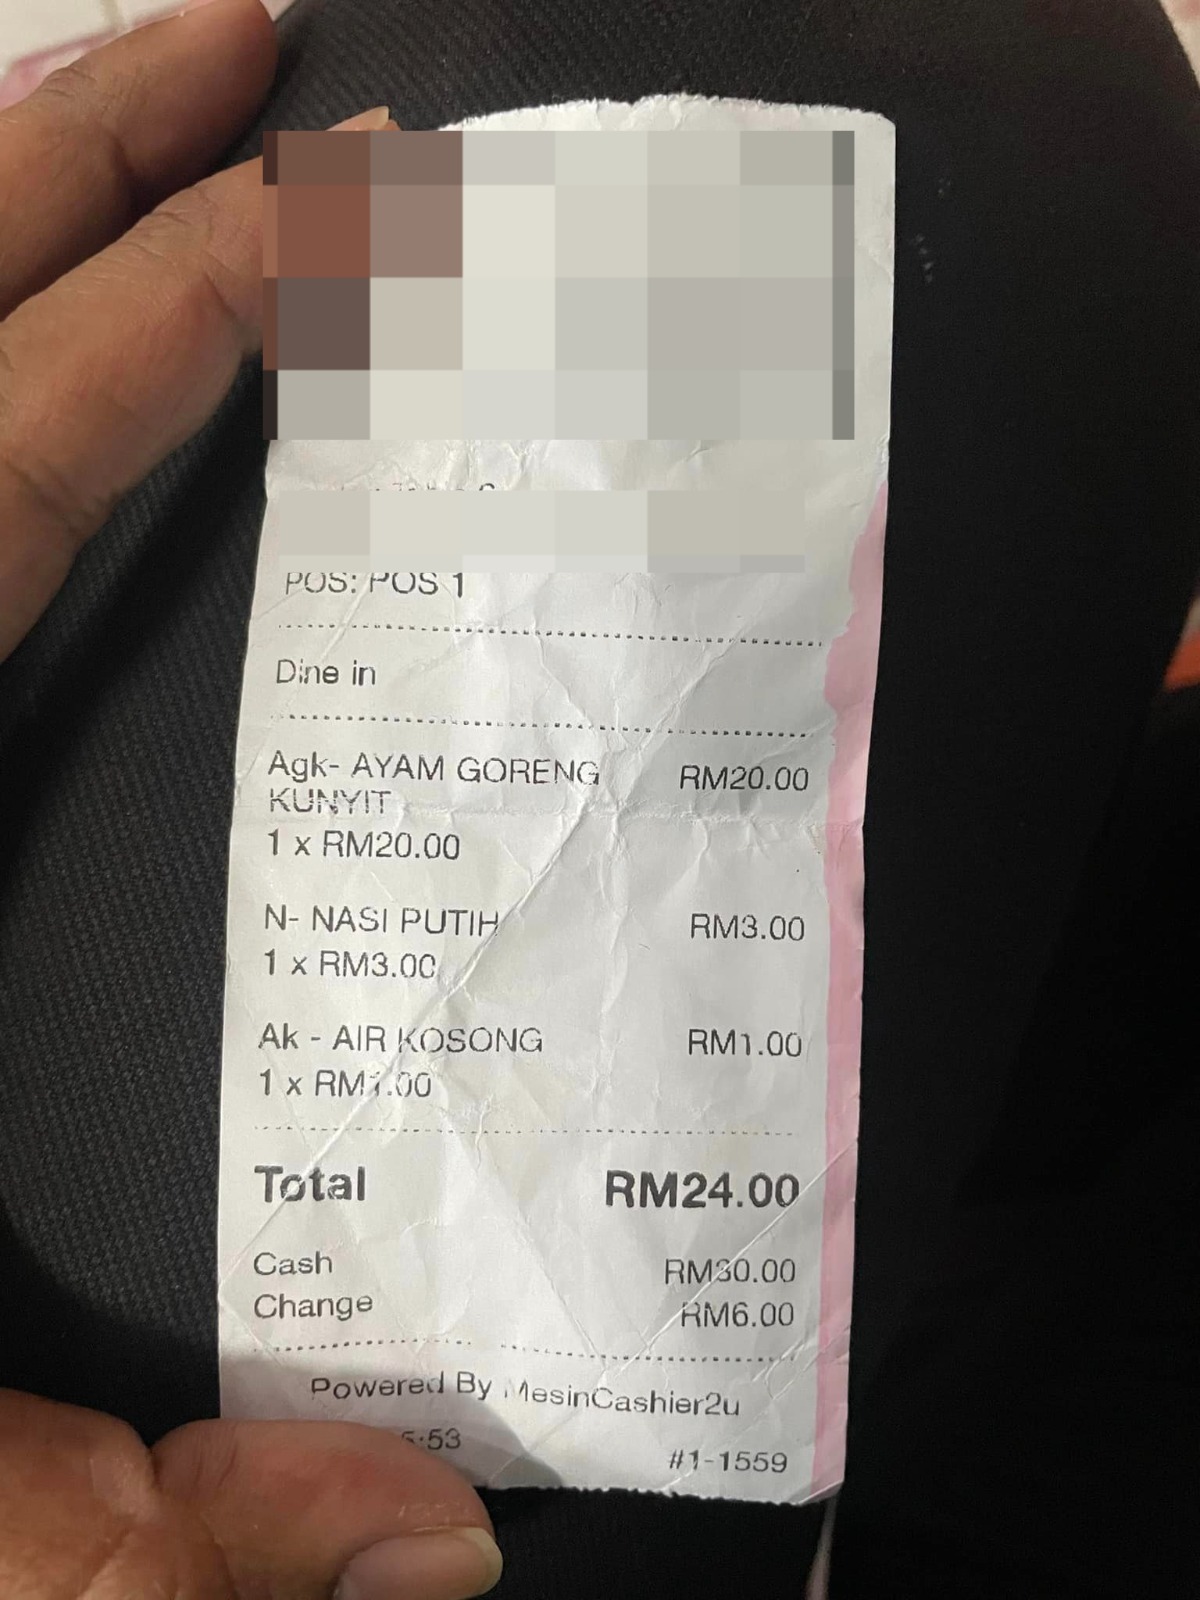 A bill from langkwai restautant that charged a customer rm23 for nasi ayam goreng kunyit